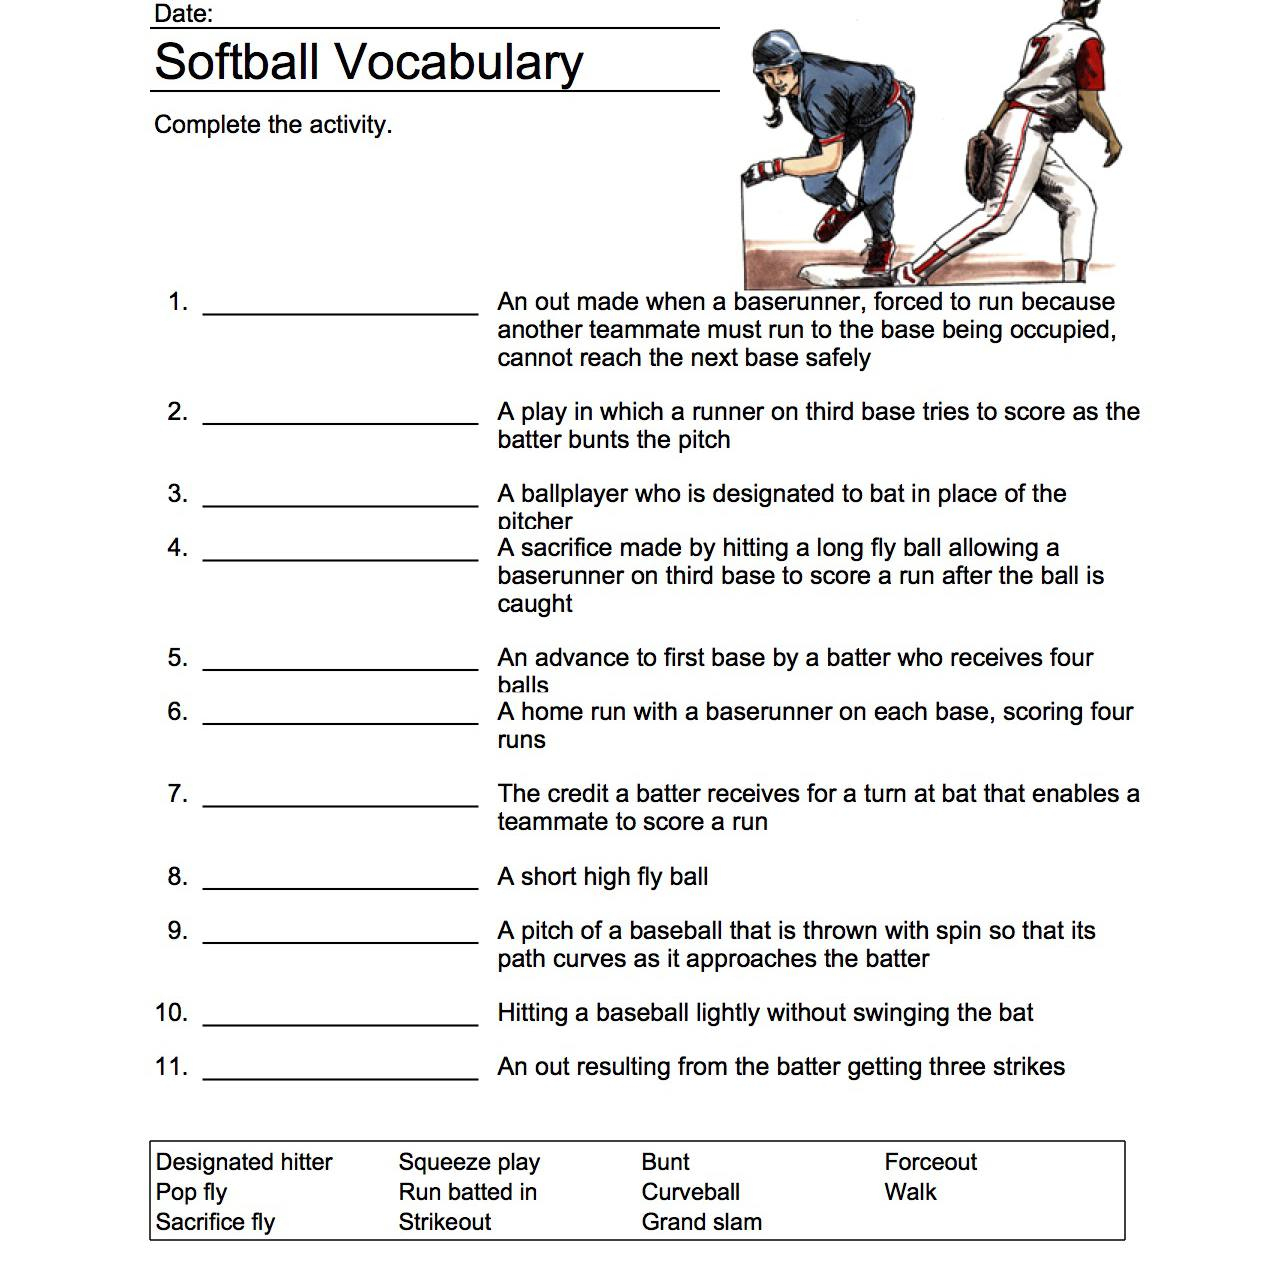 Softball Word Search, Vocabulary, Crossword And More | Softball Worksheets Printable